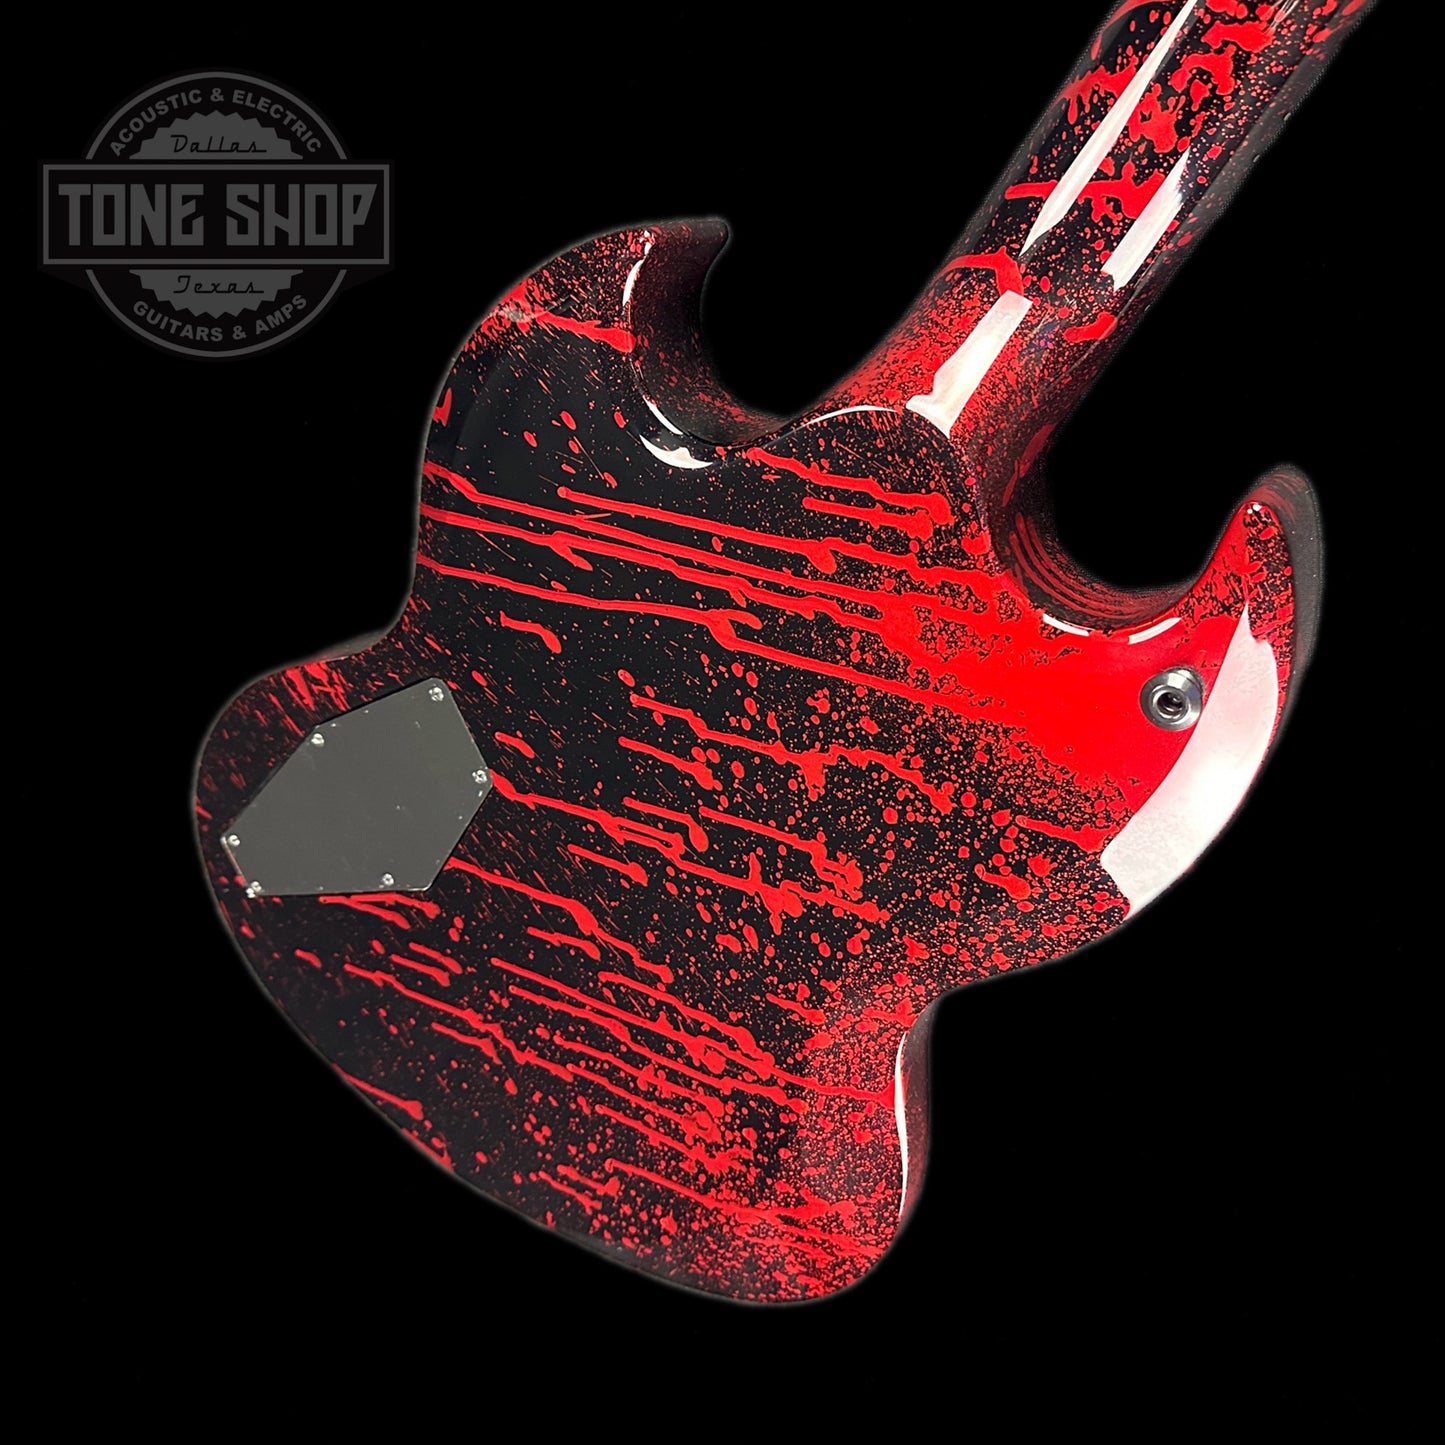 Back angle of ESP USA Viper Black Blood Splatter.